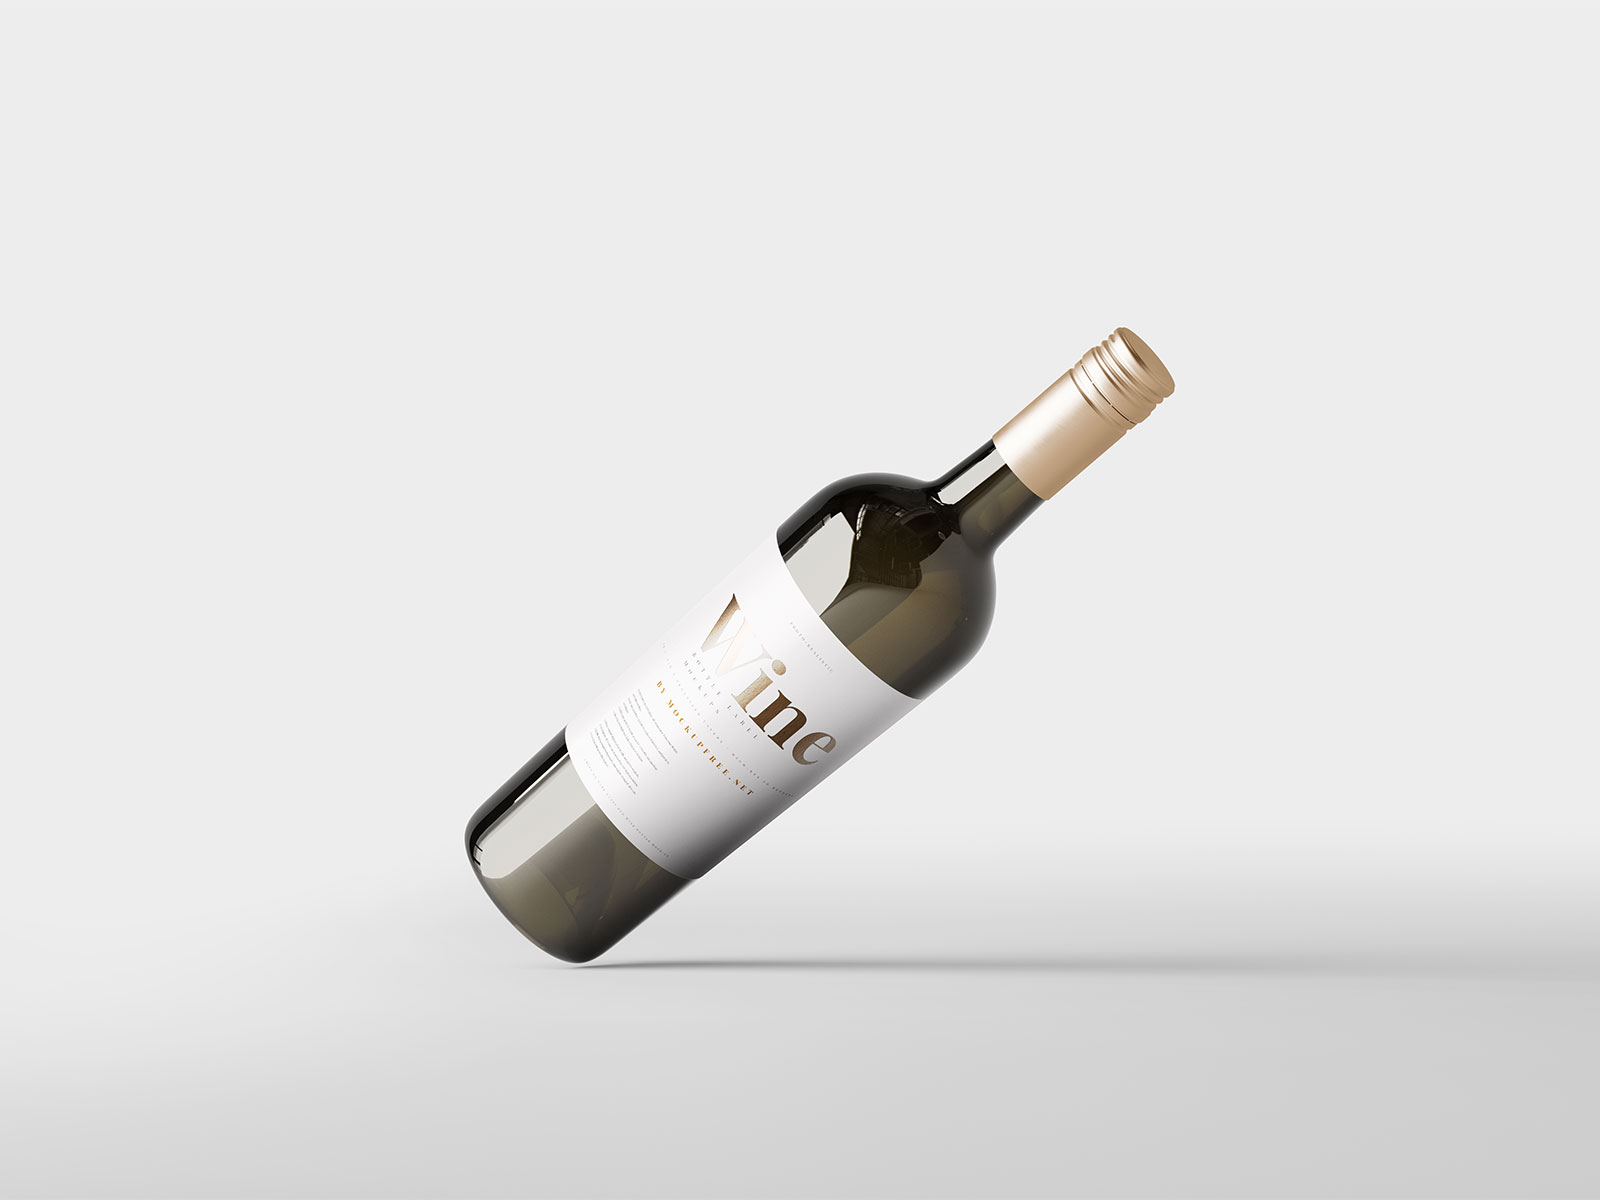 Wine Bottle Mockup – Free PSD Set